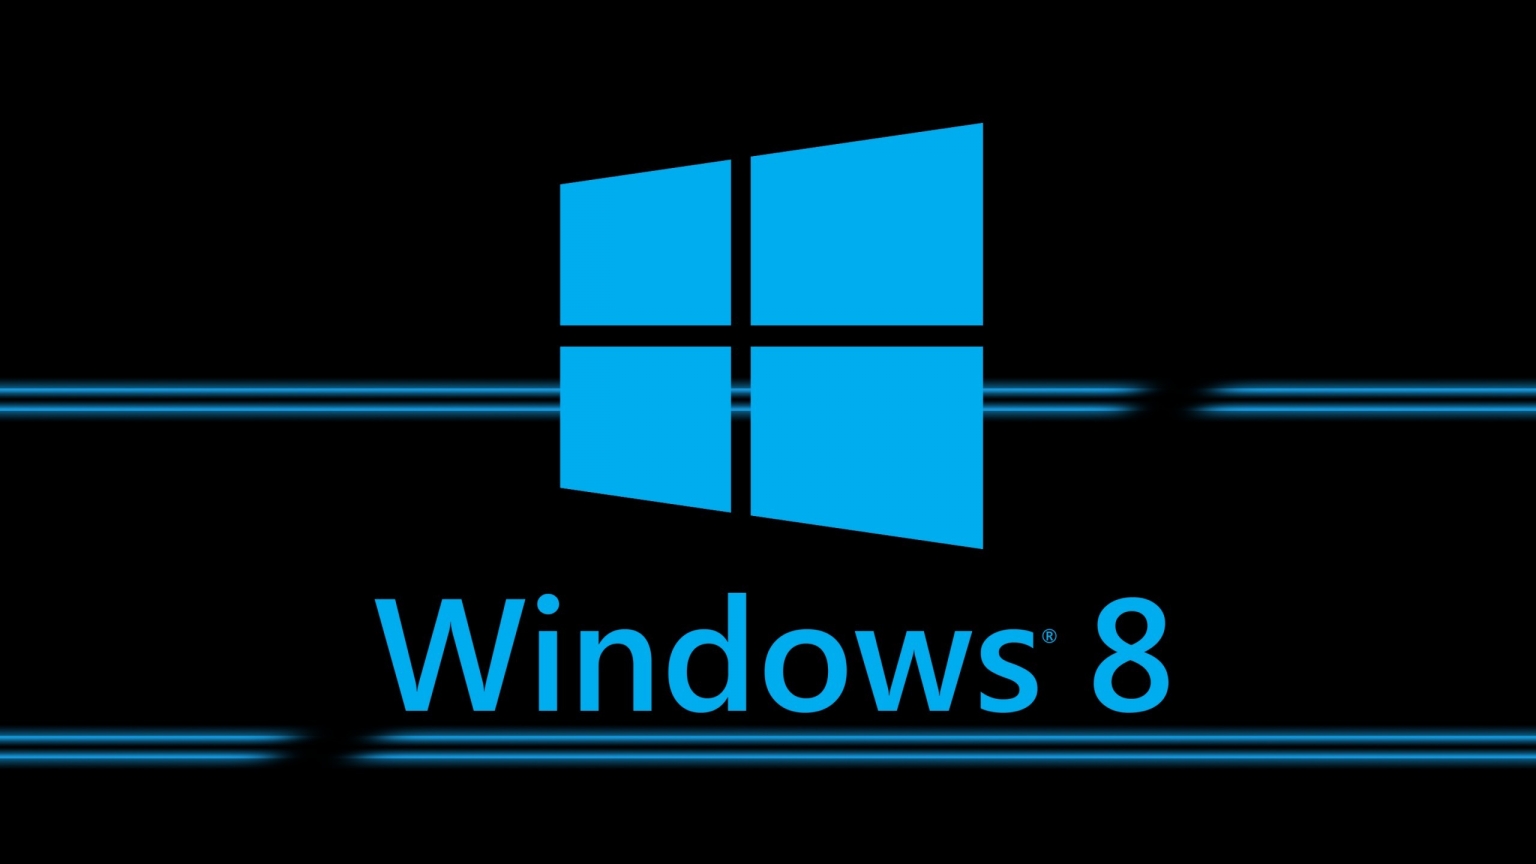 Windows 8 New for 1536 x 864 HDTV resolution